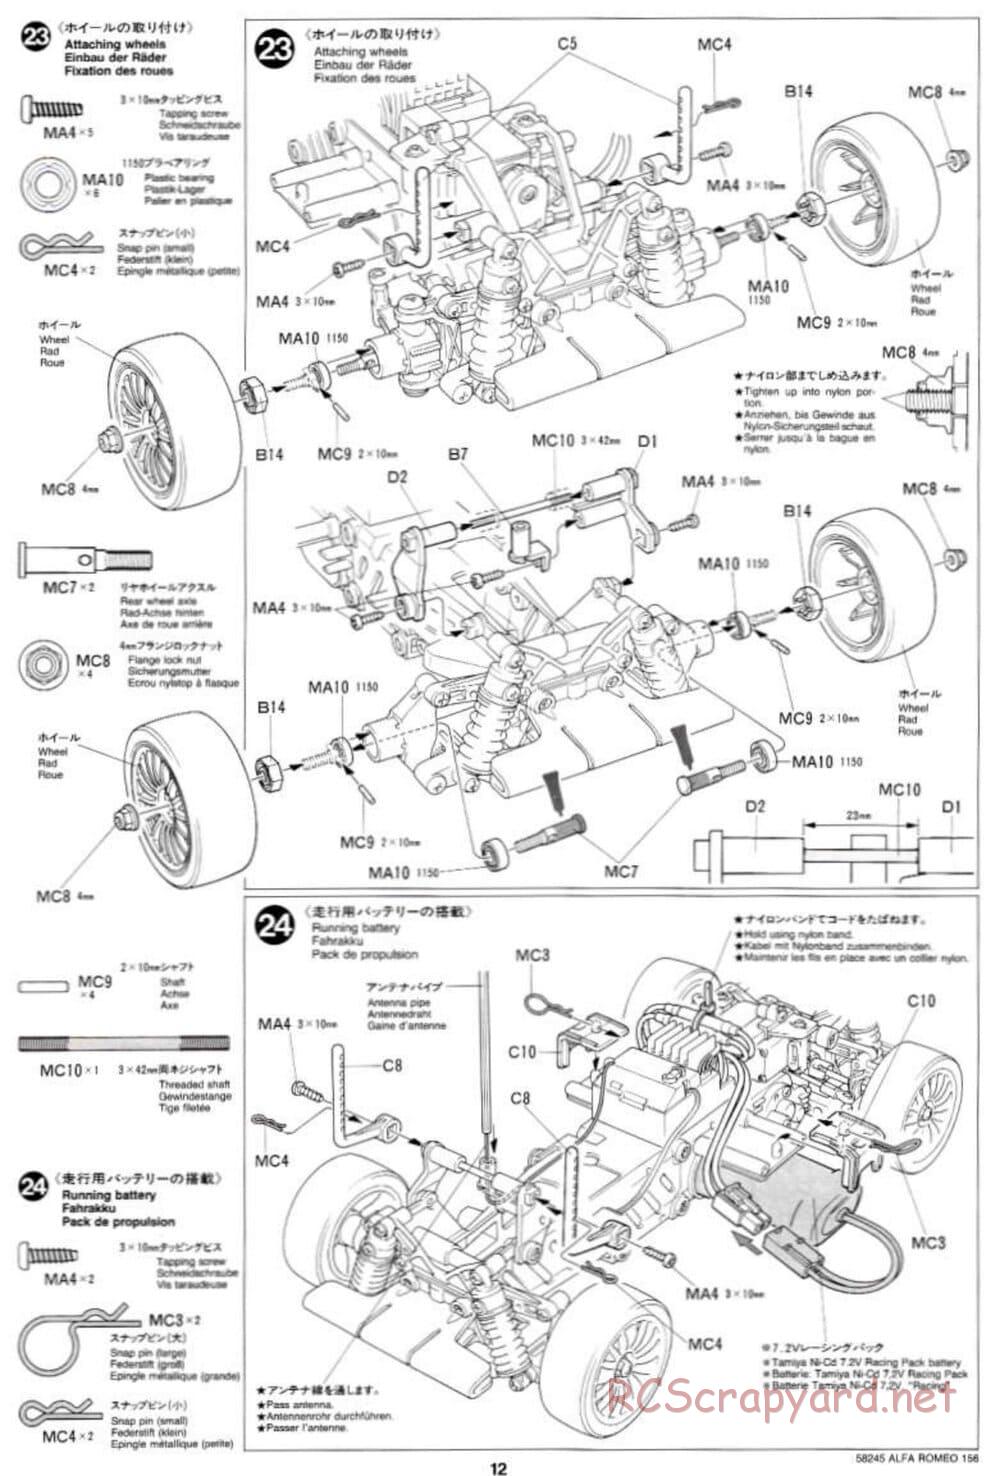 Tamiya - Alfa Romeo 156 Racing - FF-02 Chassis - Manual - Page 12